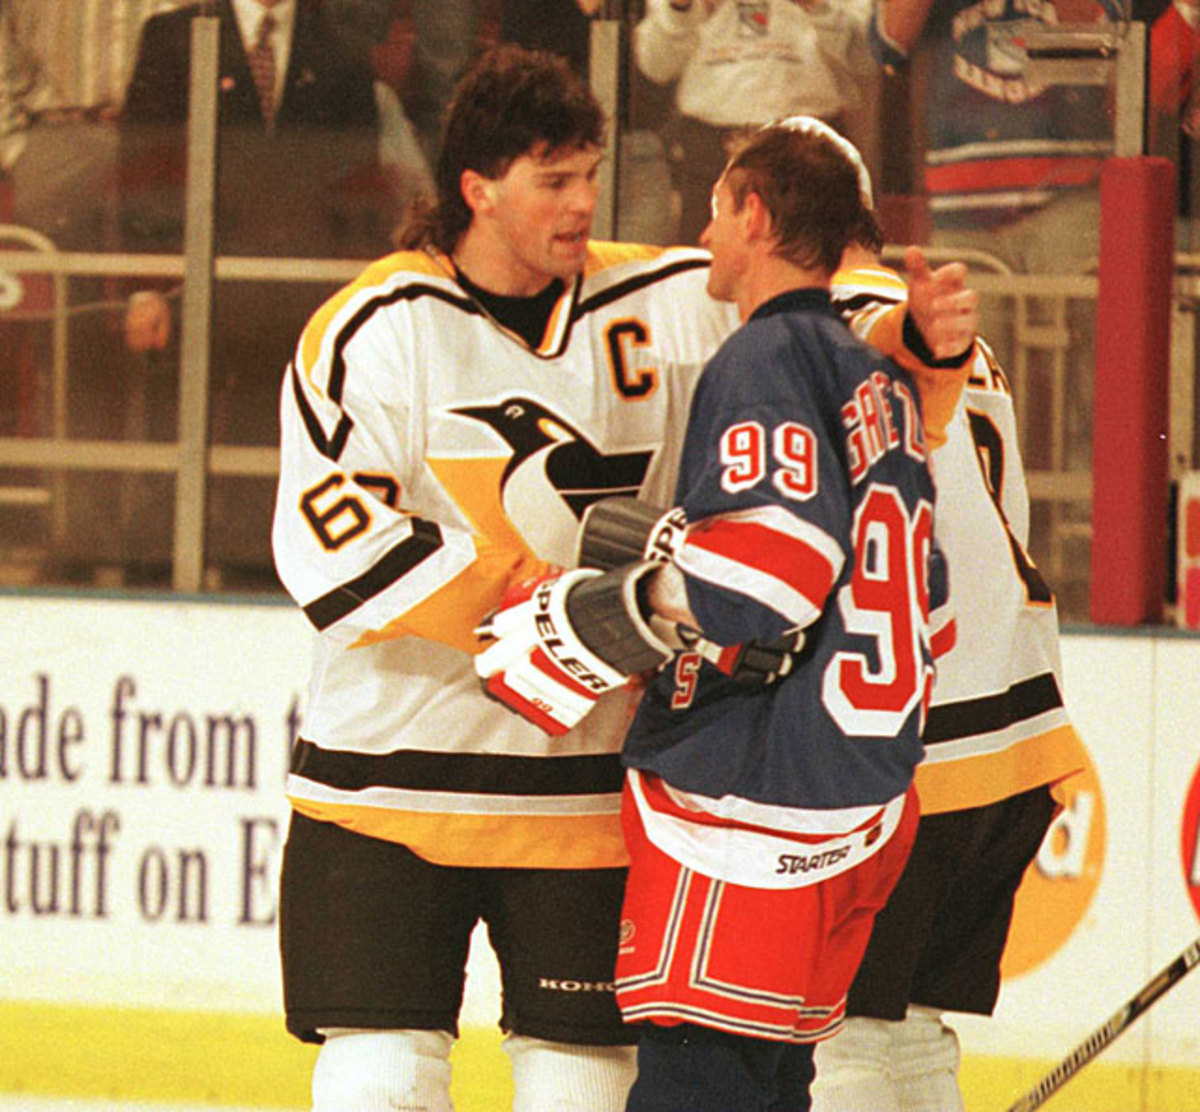  Jaromir Jagr and Wayne Gretzky